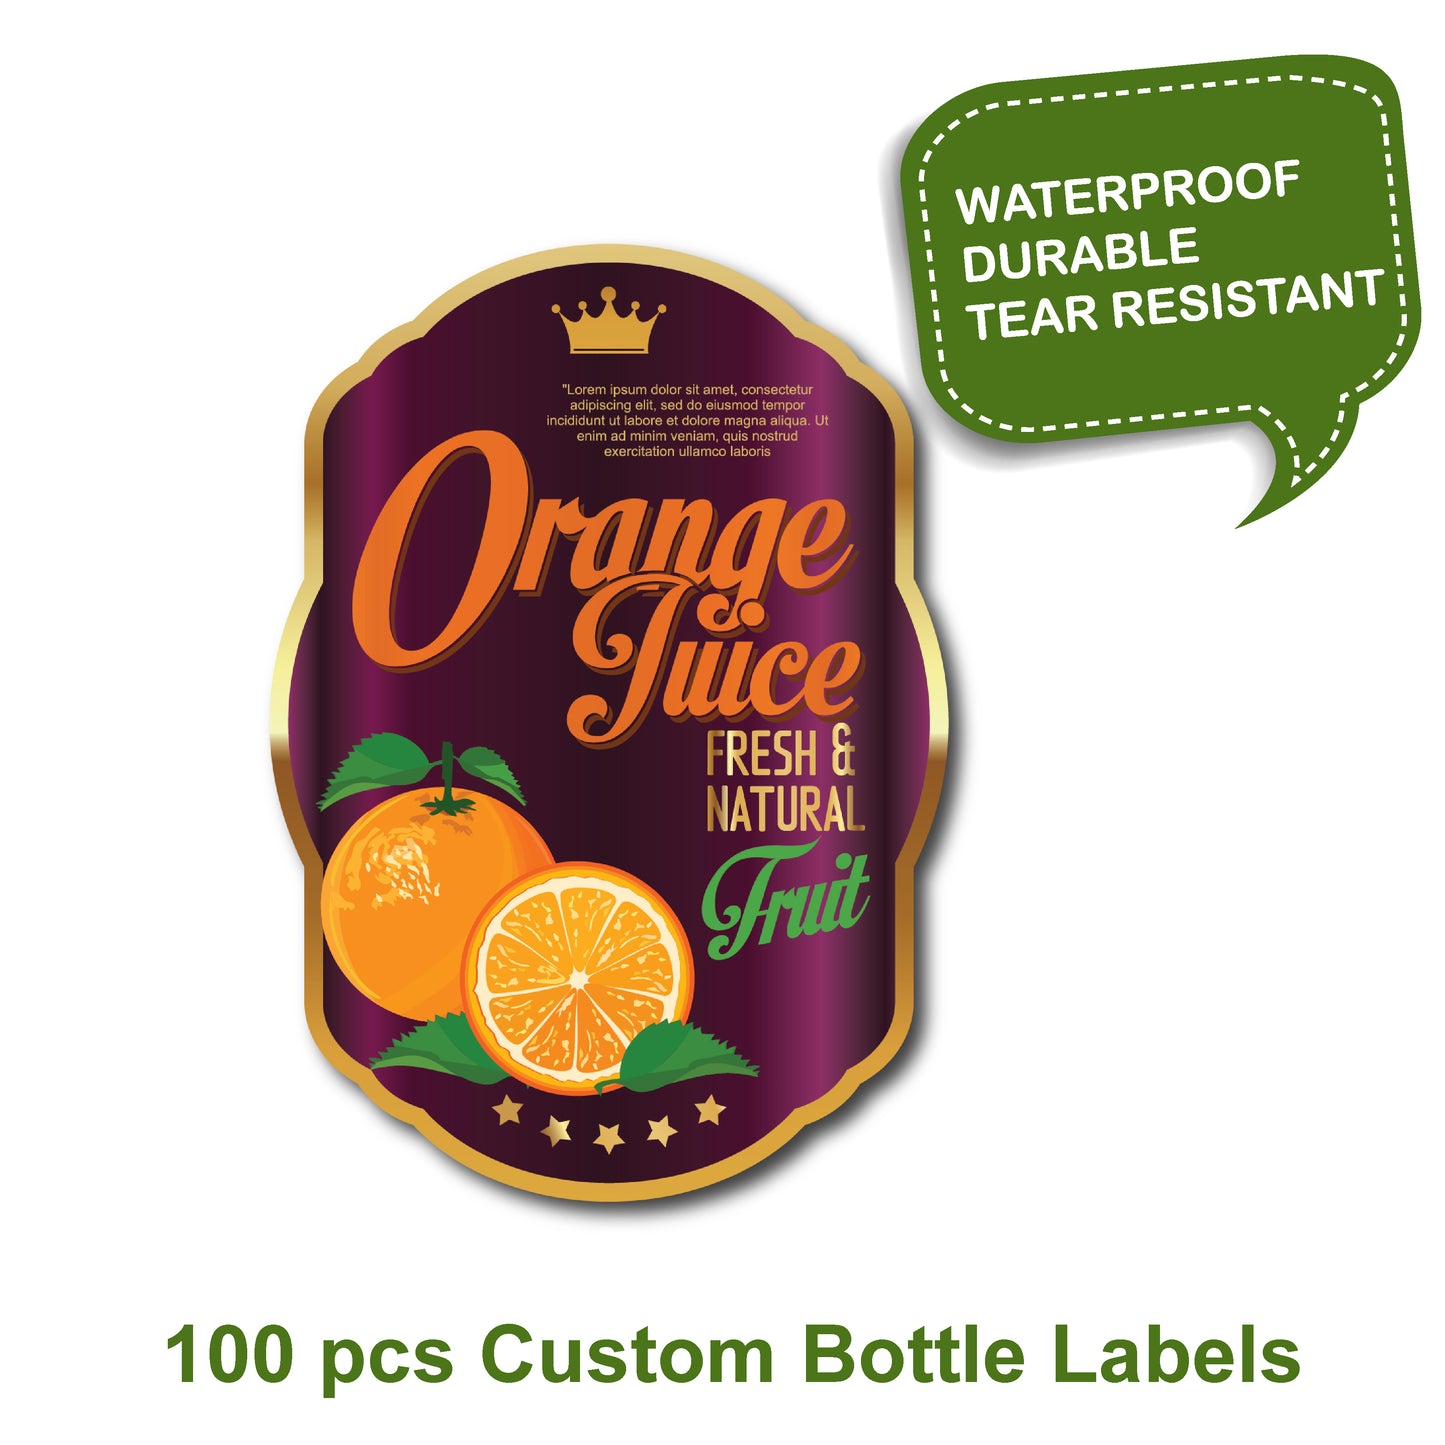 Orange juice label, 100 pcs Custom bottle labels, custom maple syrup label, custom label, custom candle label, custom product label, labels